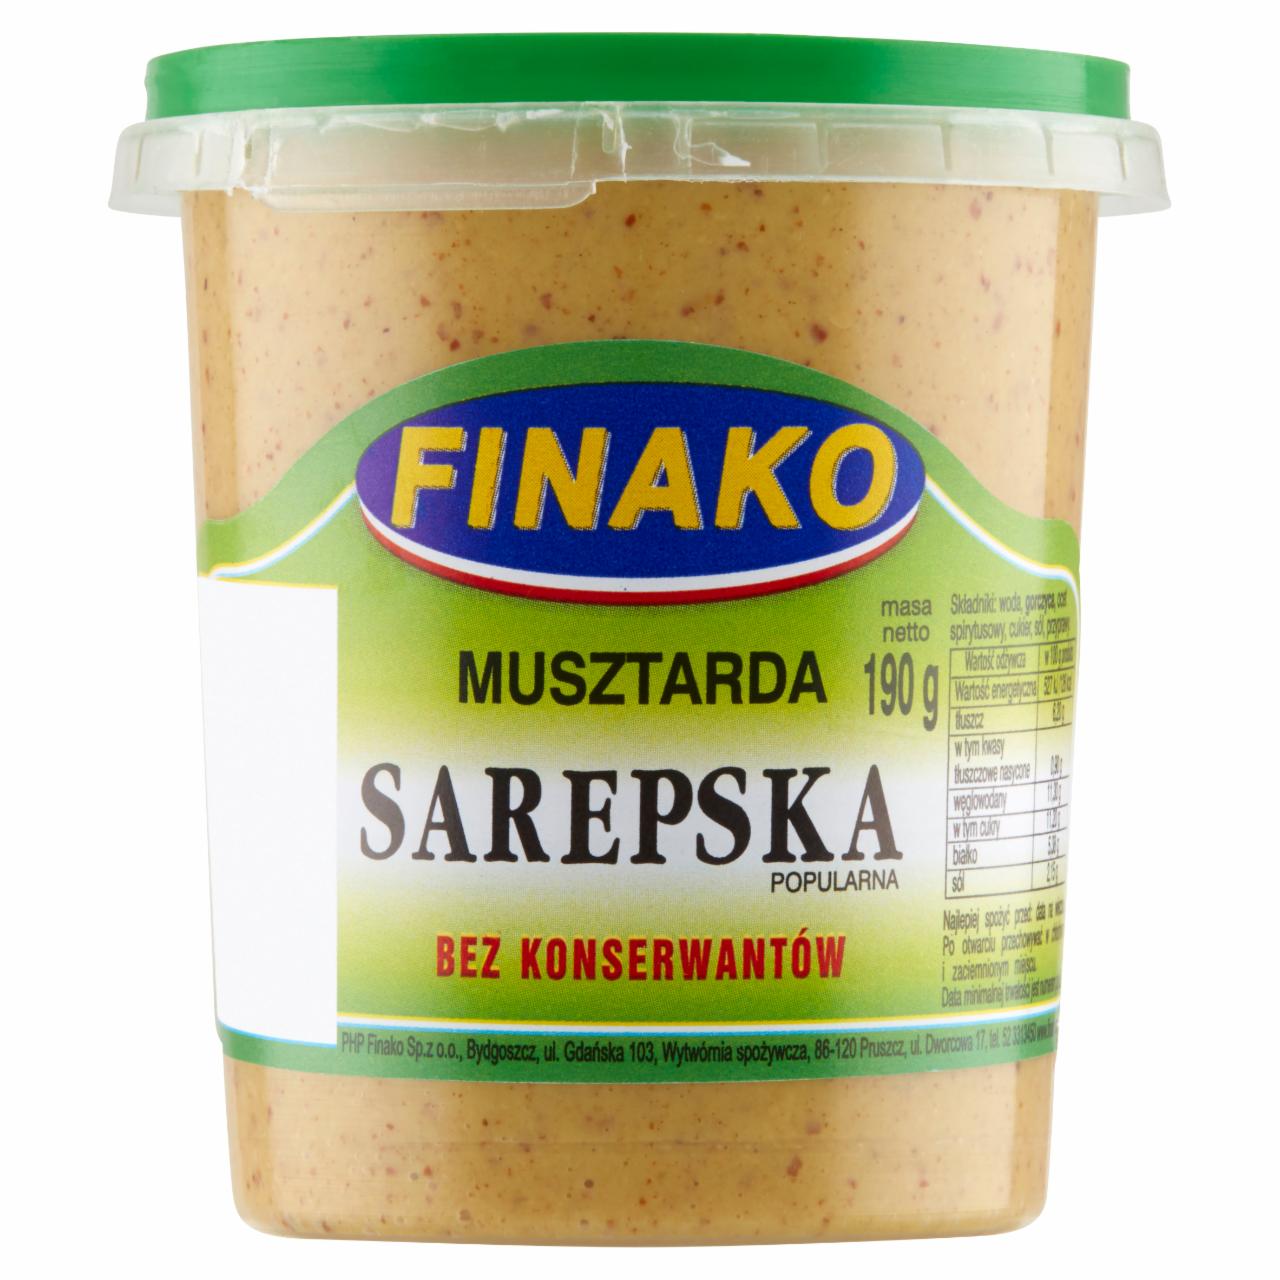 Zdjęcia - Finako Musztarda sarepska popularna 190 g